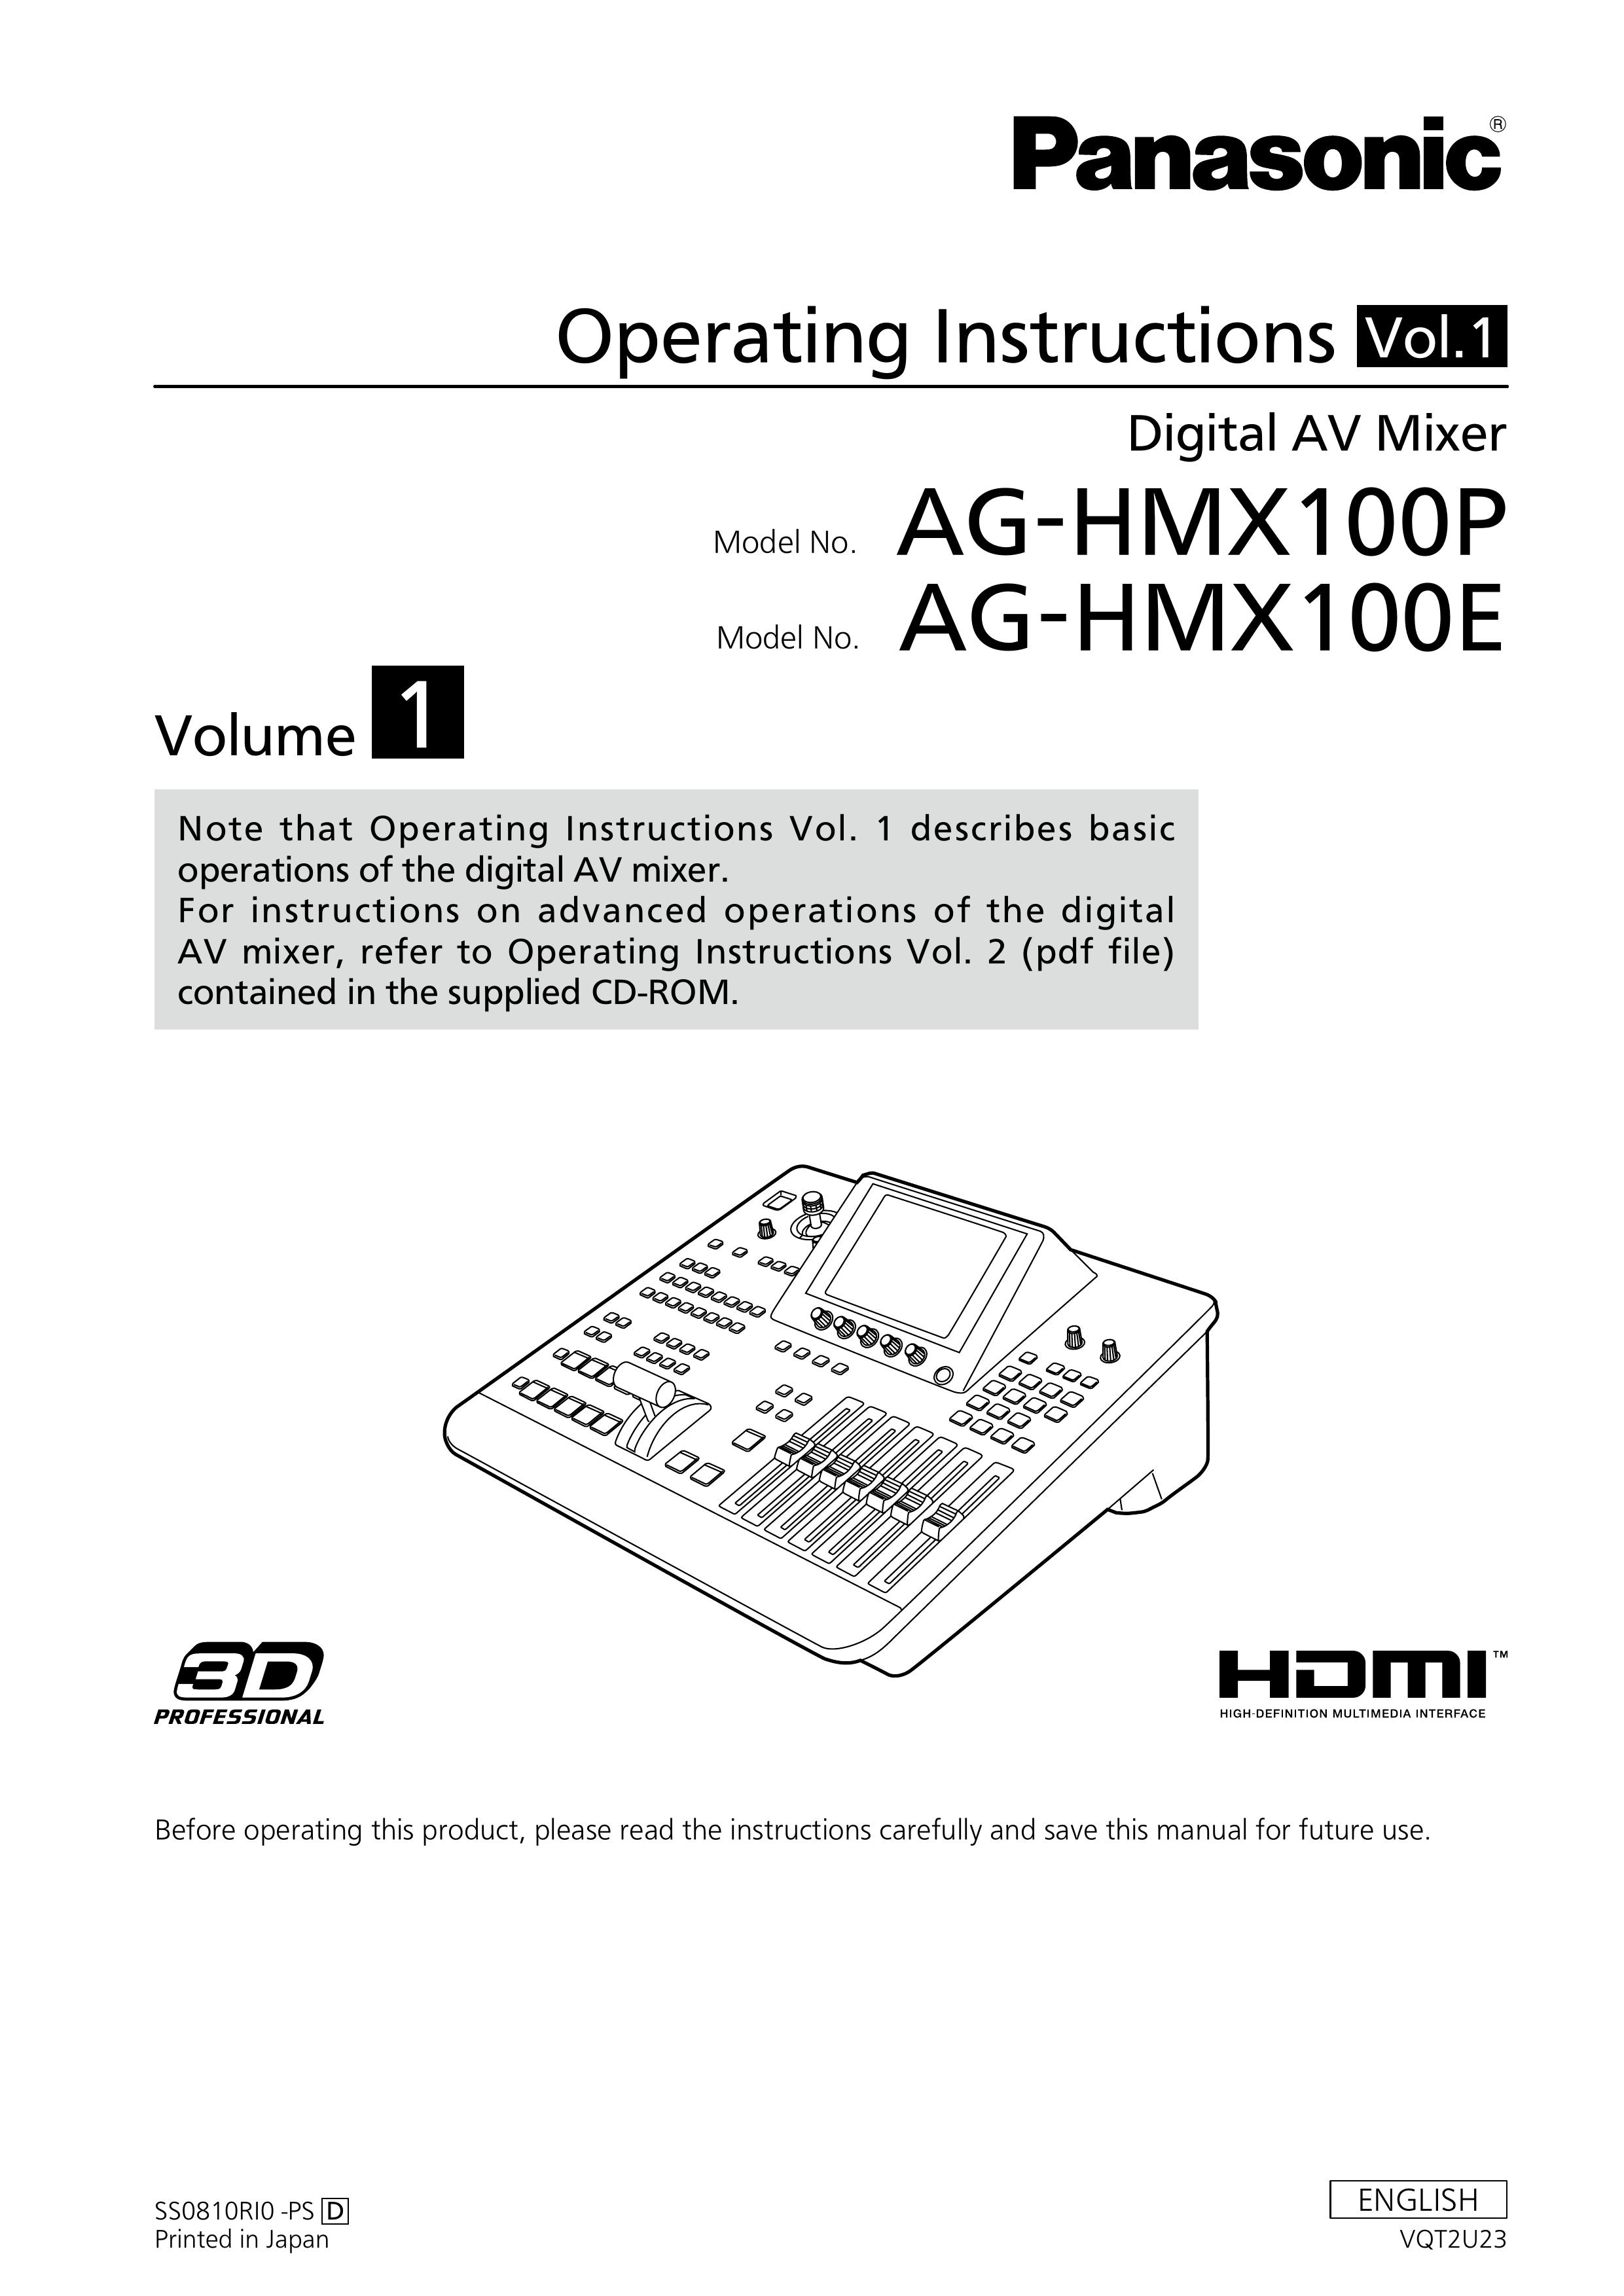 Panasonic AG-HMX100P Music Mixer User Manual